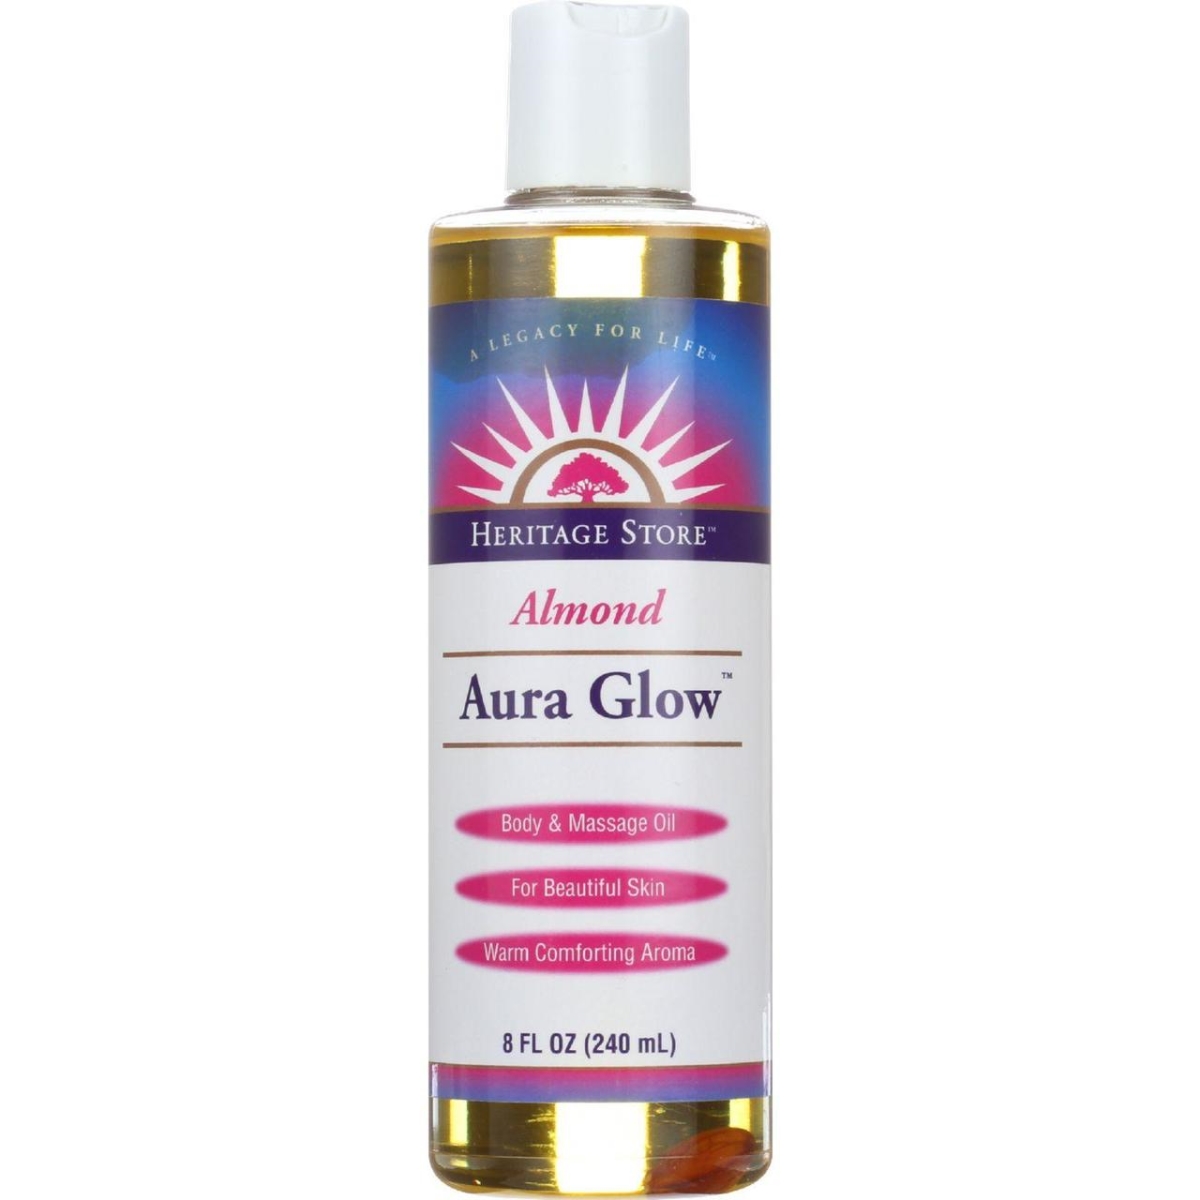 Hg0957308 8 Oz Aura Glow Body Oil - Almond